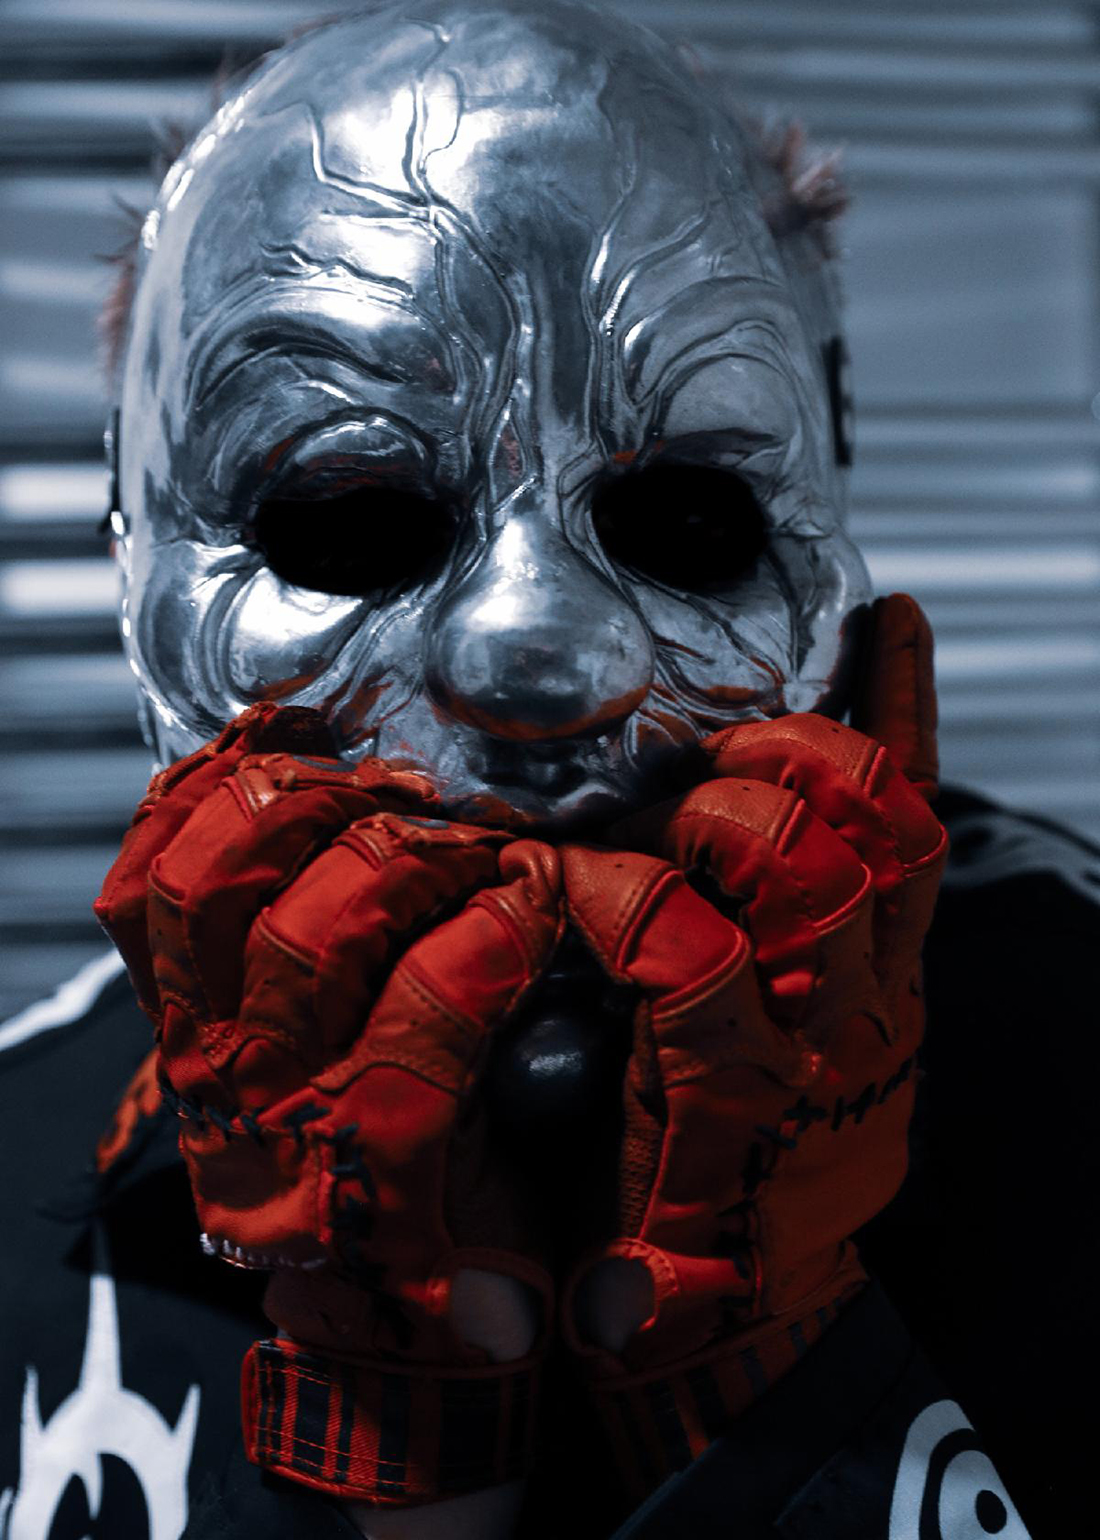 M. Shawn Crahan akak Clown of Slipknot